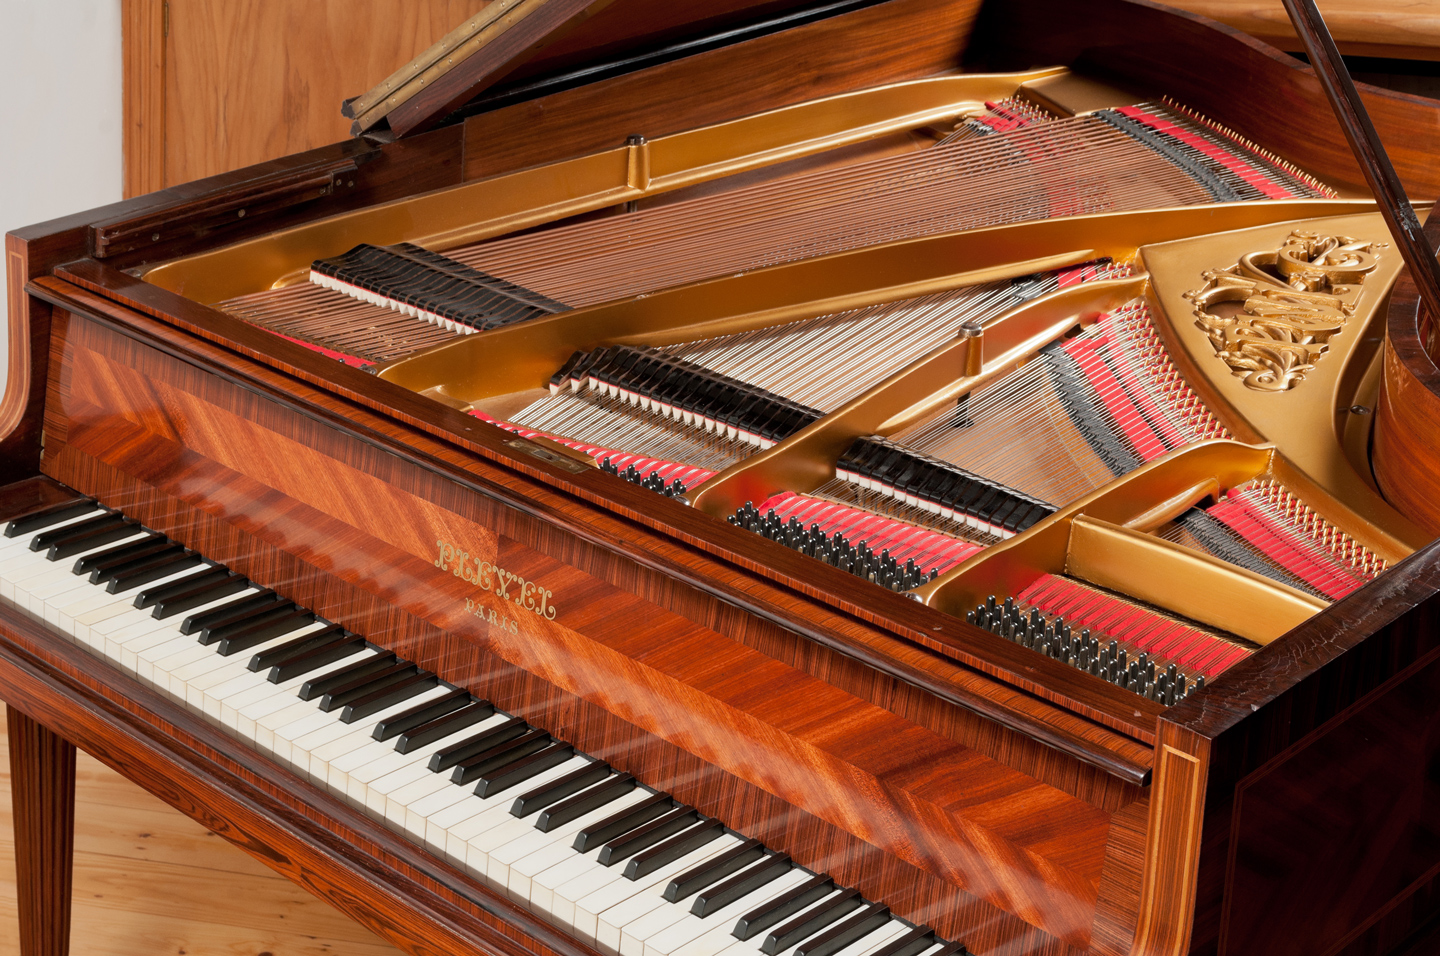 Pleyel piano image